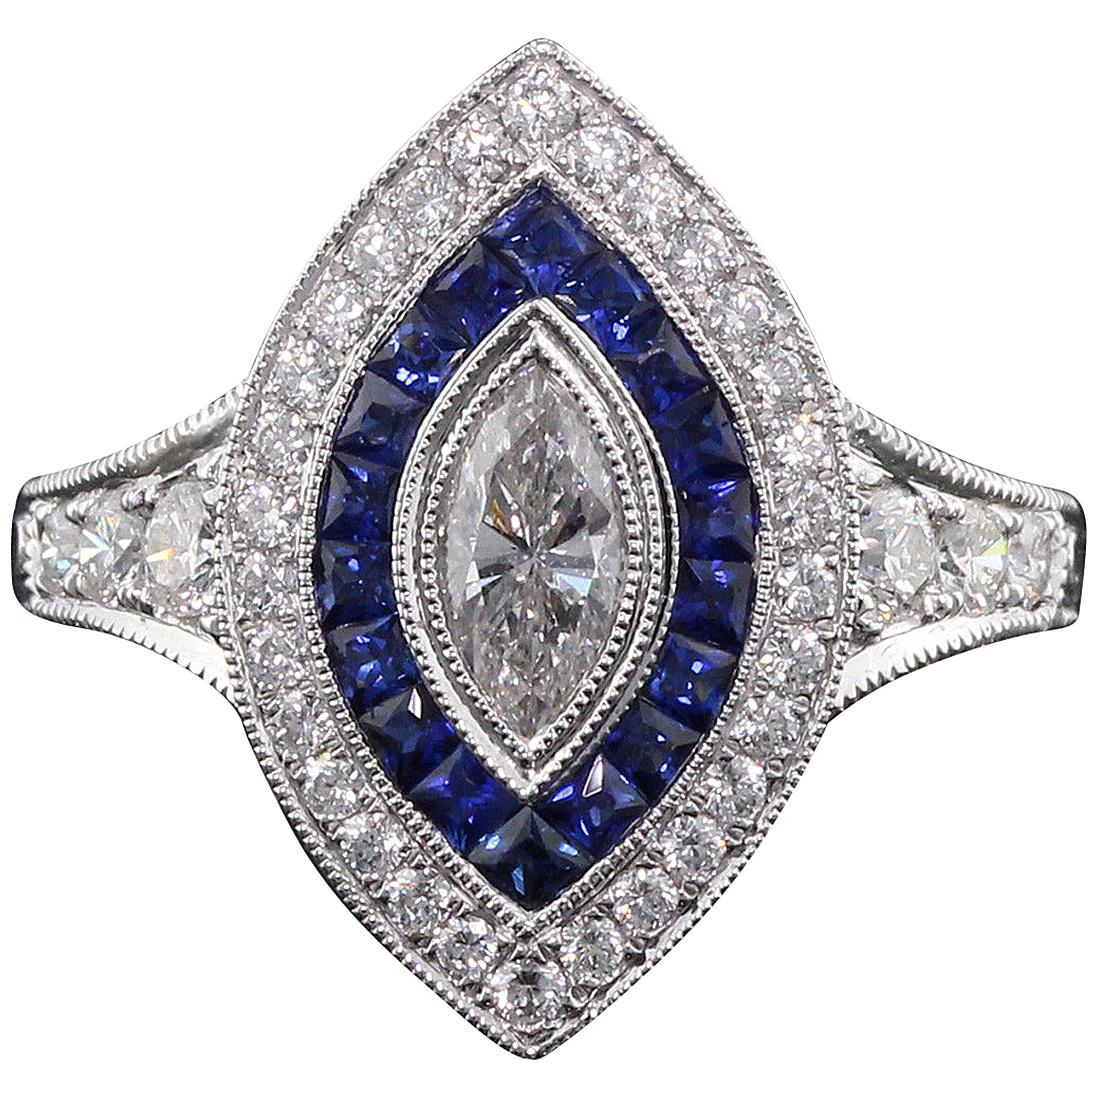 Art Deco Inspired 18 Karat White Gold, Marquise Diamond and Sapphire Ring